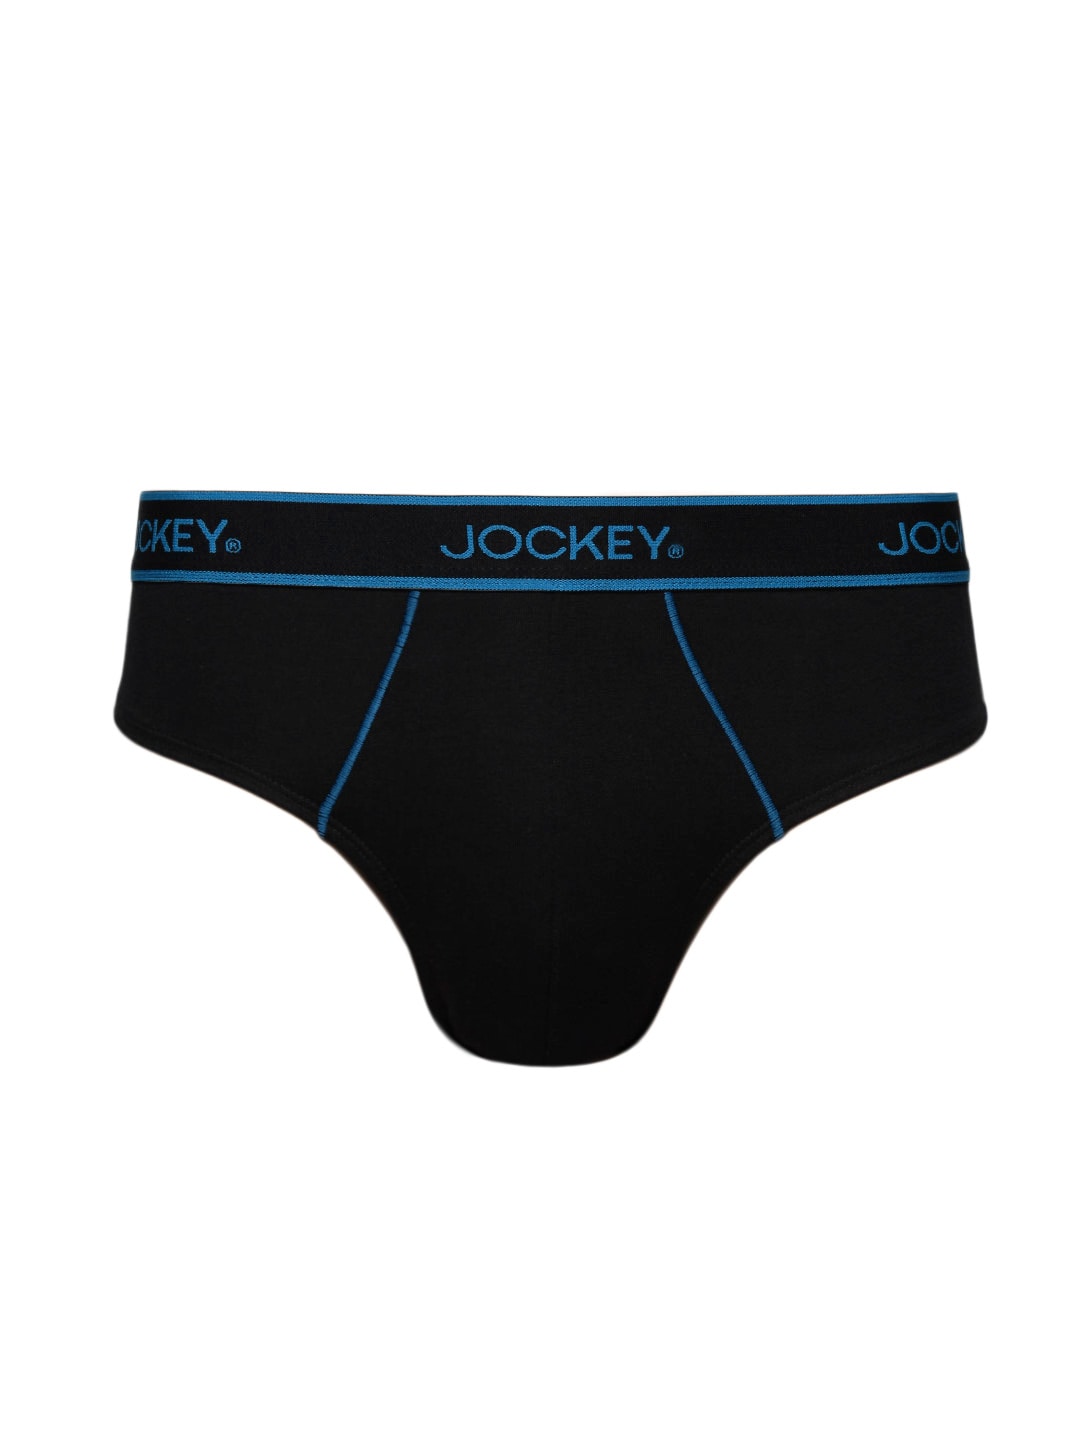 Jockey Men Comfort Stretch Black Bikini Brief